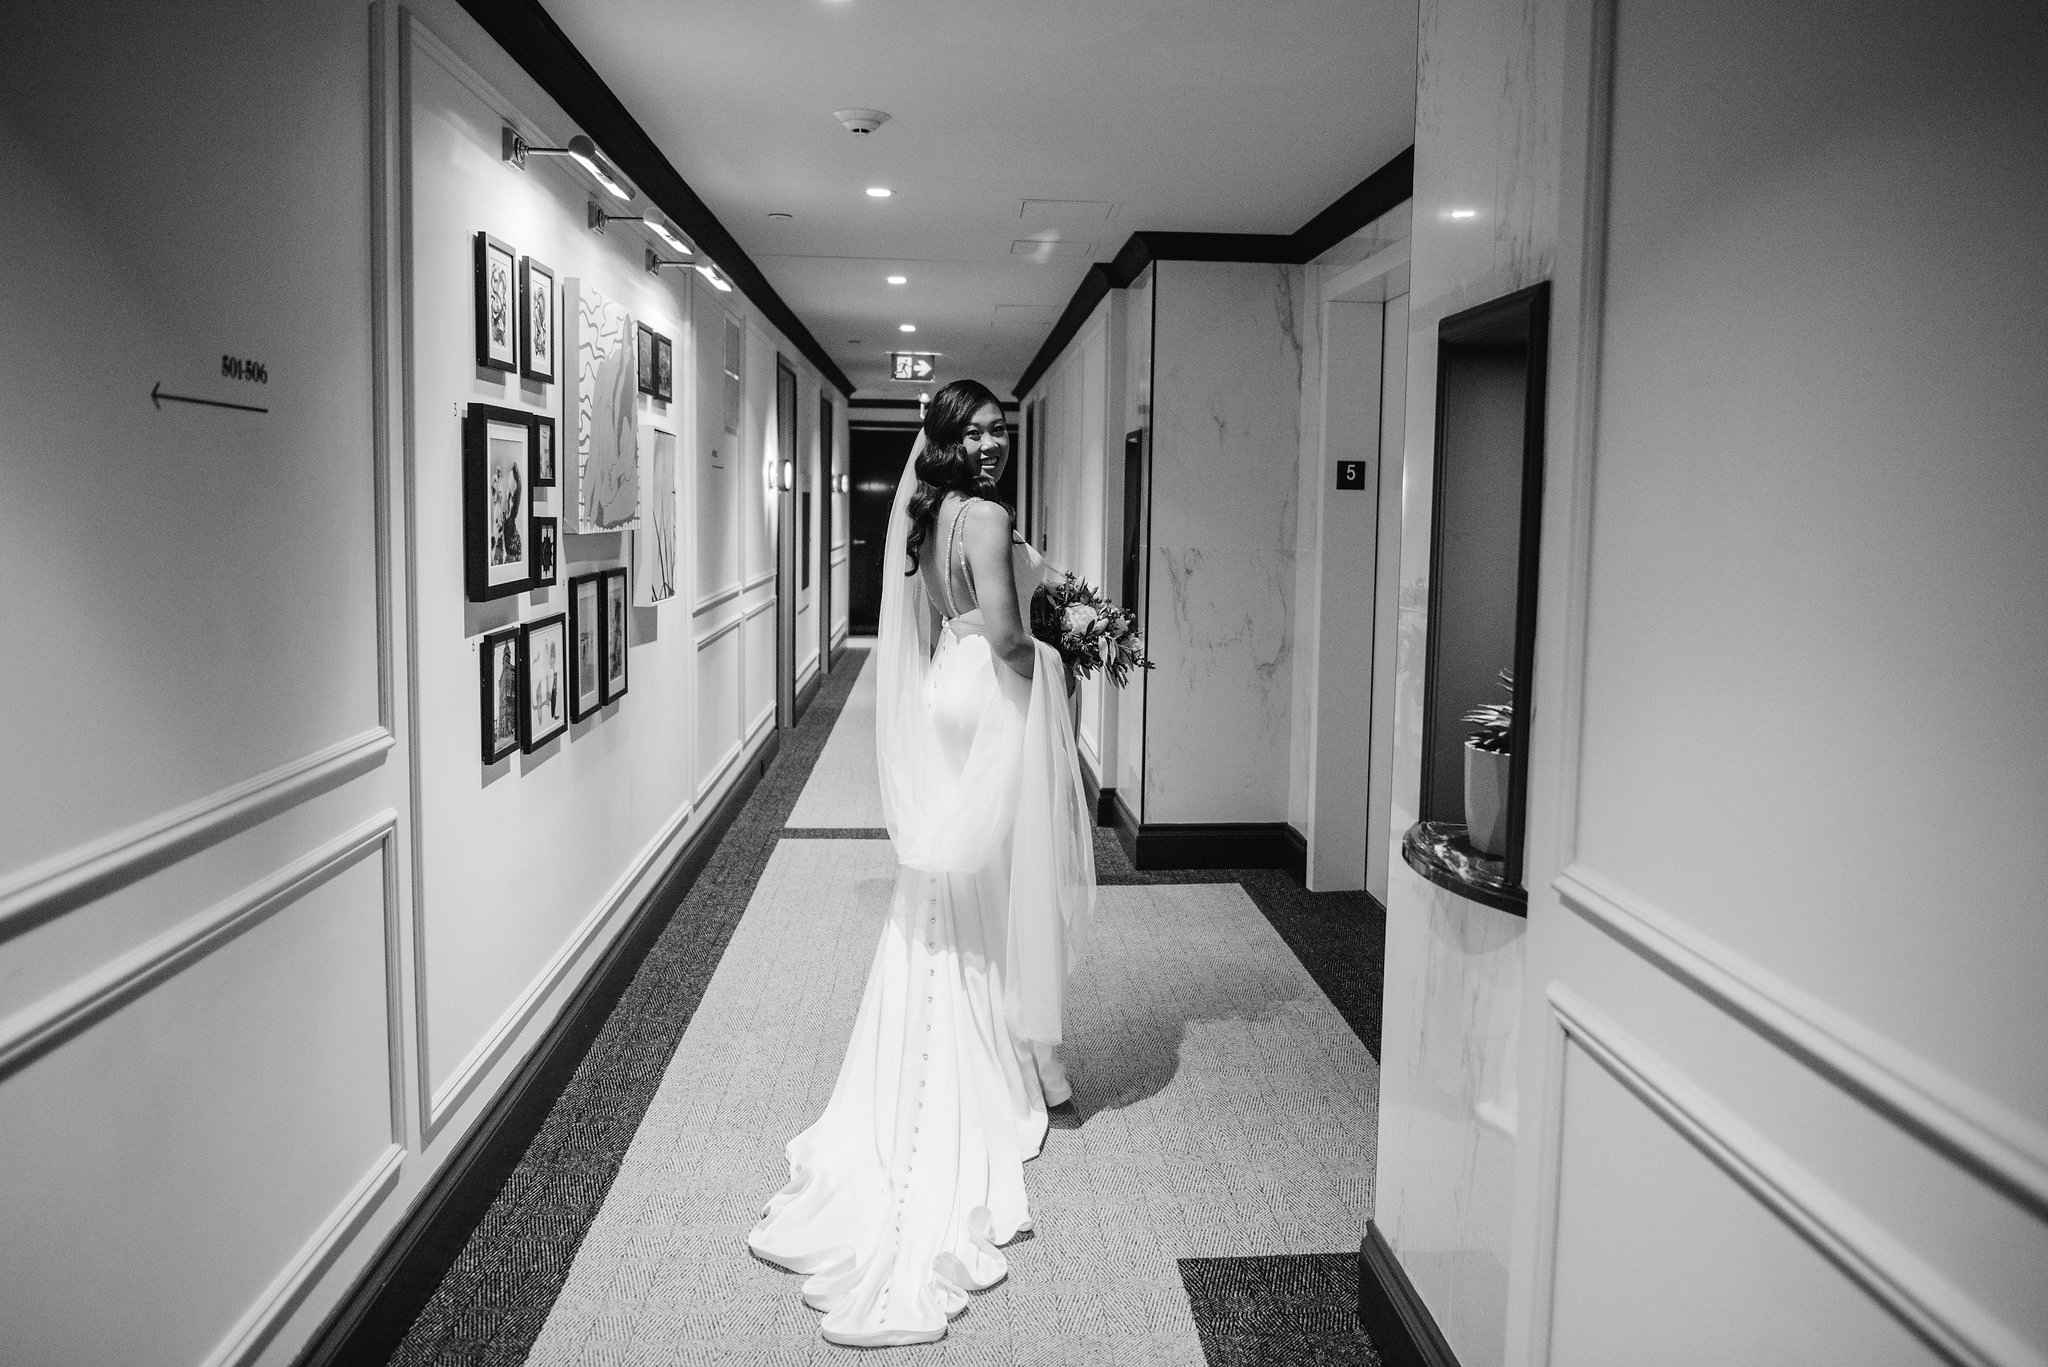 Candid wedding photographer - Olive Photography - Toronto wedding photographer